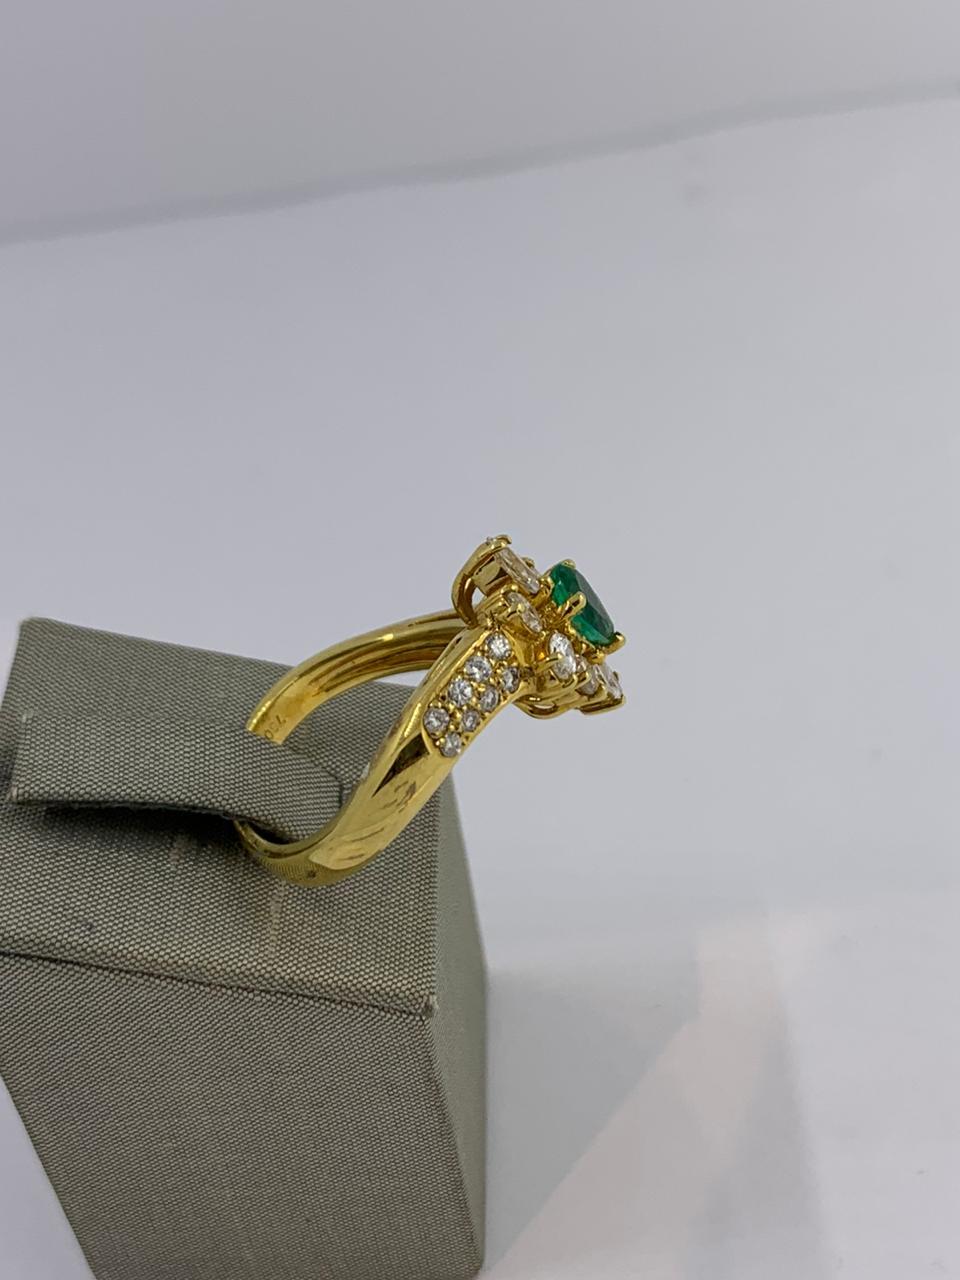 Emerald and Diamond Ring
Emerald 0.40 ct
P Diamonds 0.48ct
R Diamonds 0.42 ct
set in 18kt Yellow Gold
21-11406